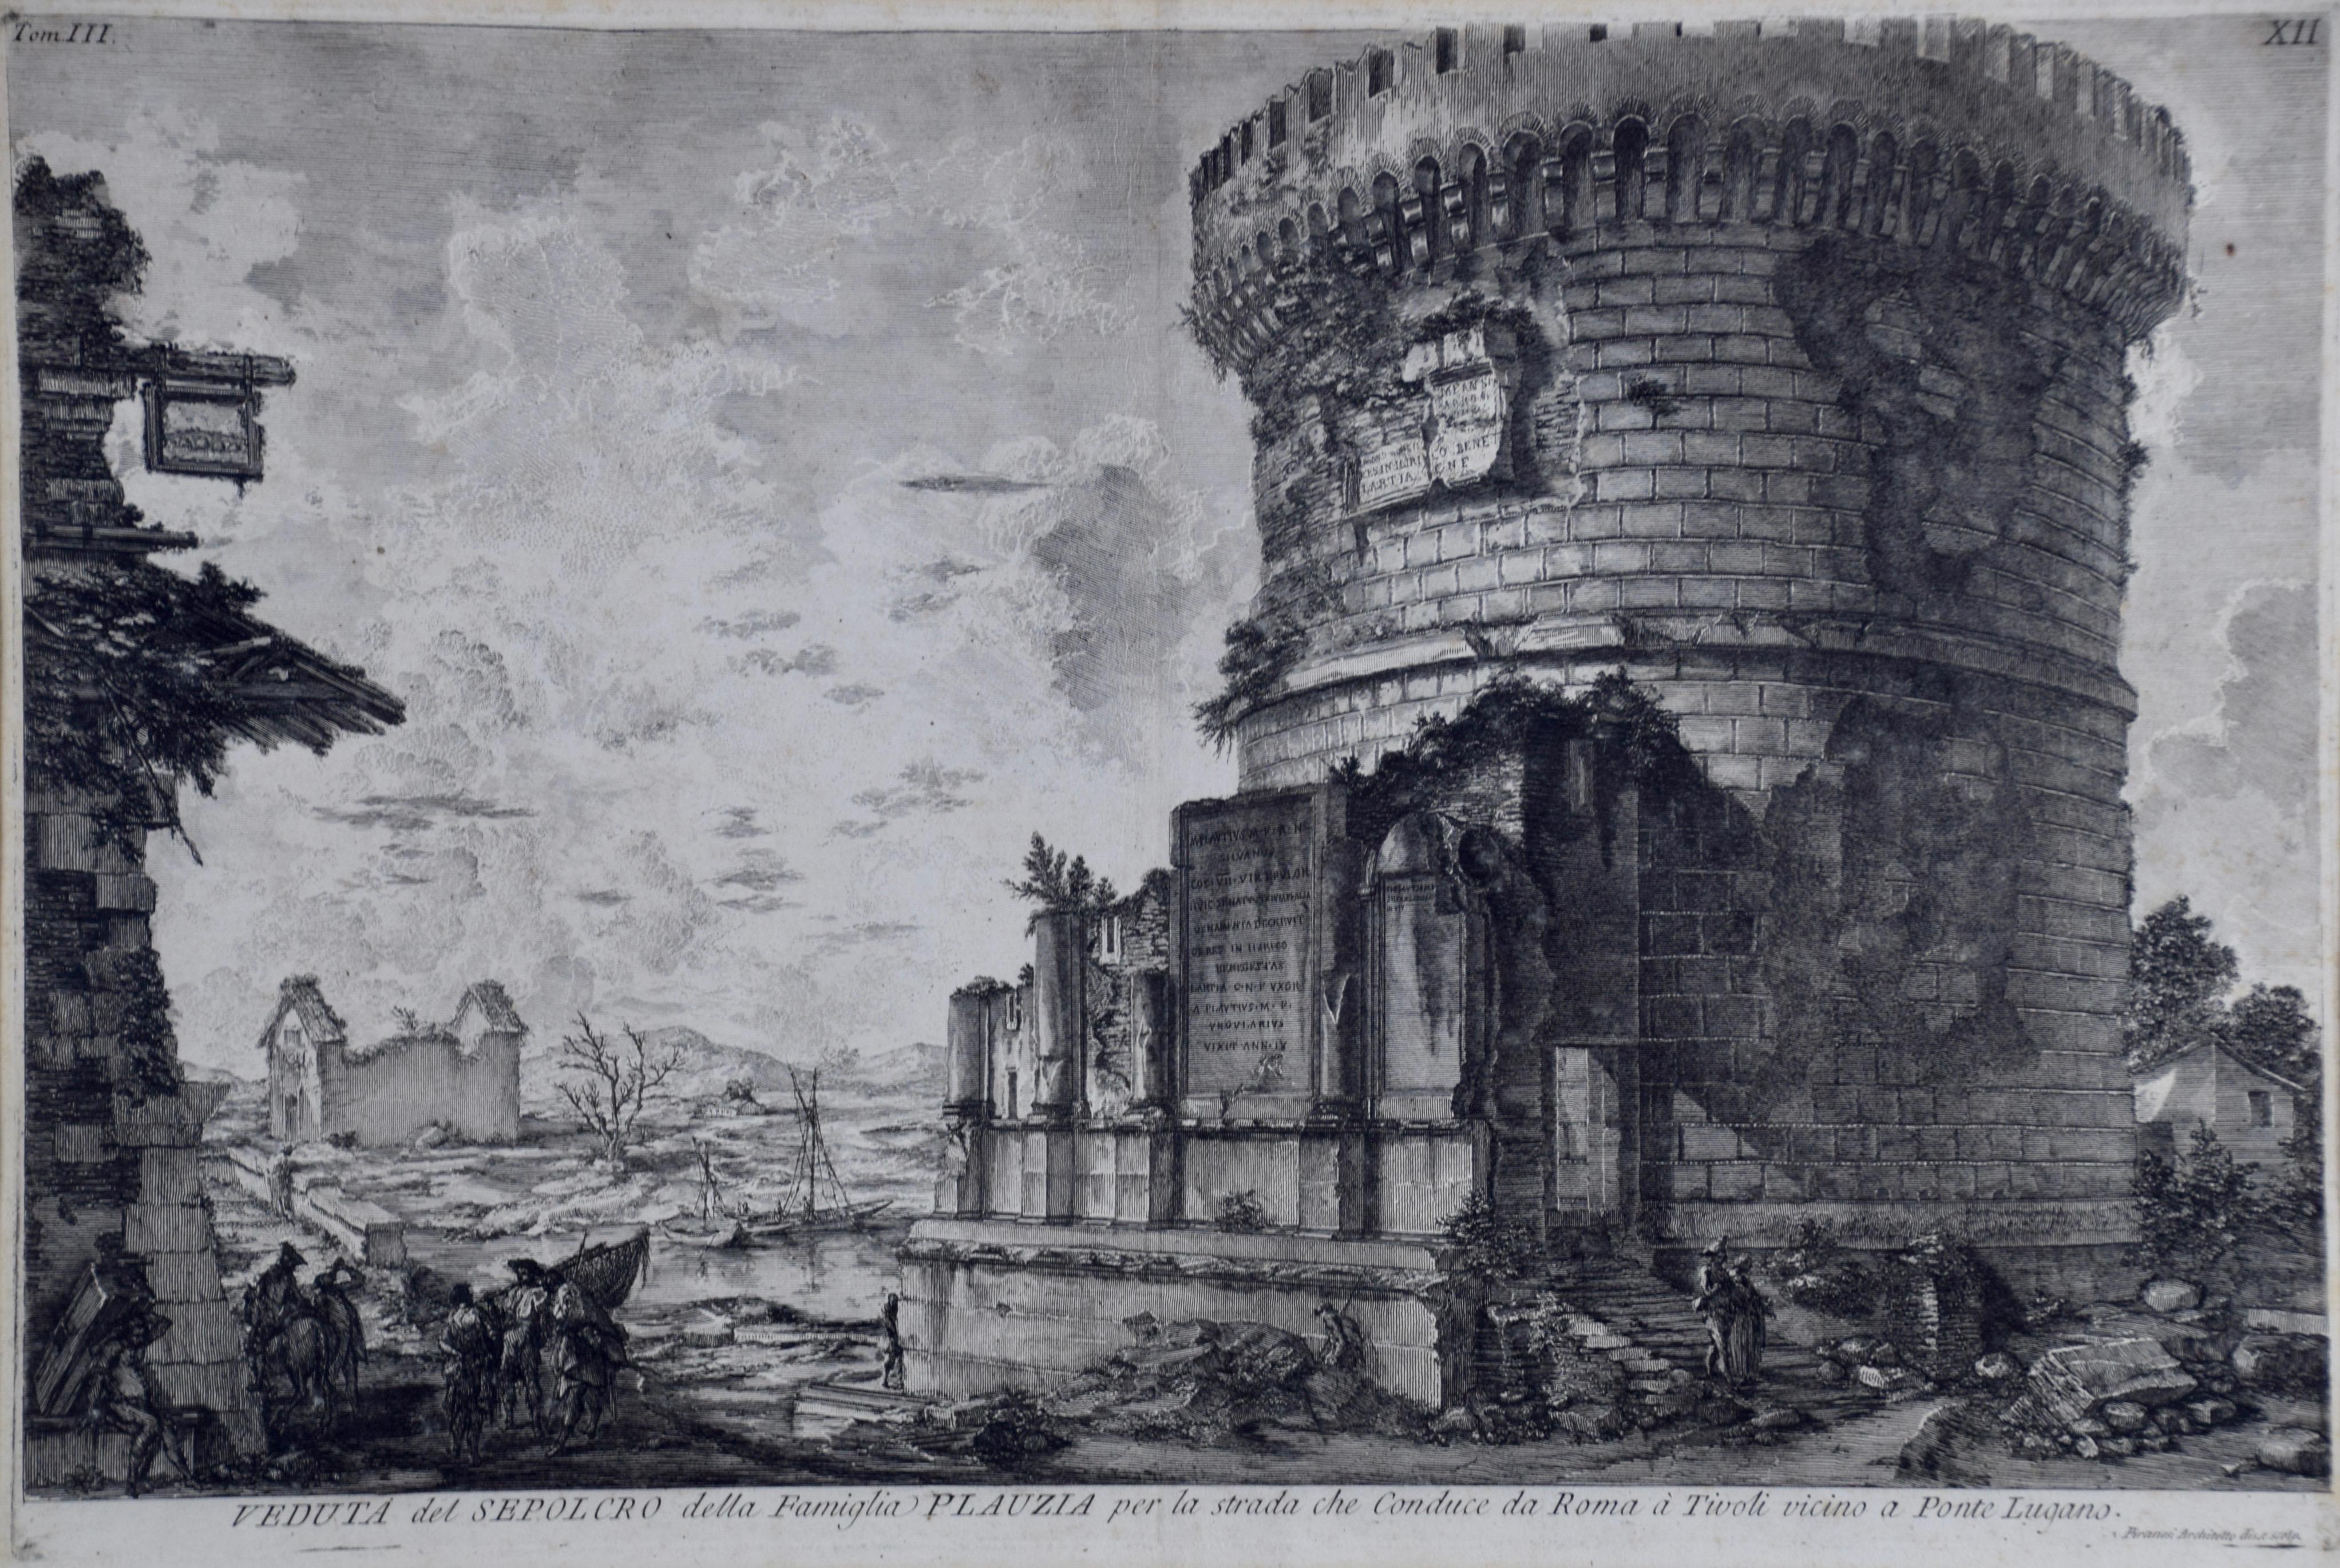 Giovanni Piranesi Etching of Ancient Roman Architecture, 18th Century - Print by Giovanni Battista Piranesi